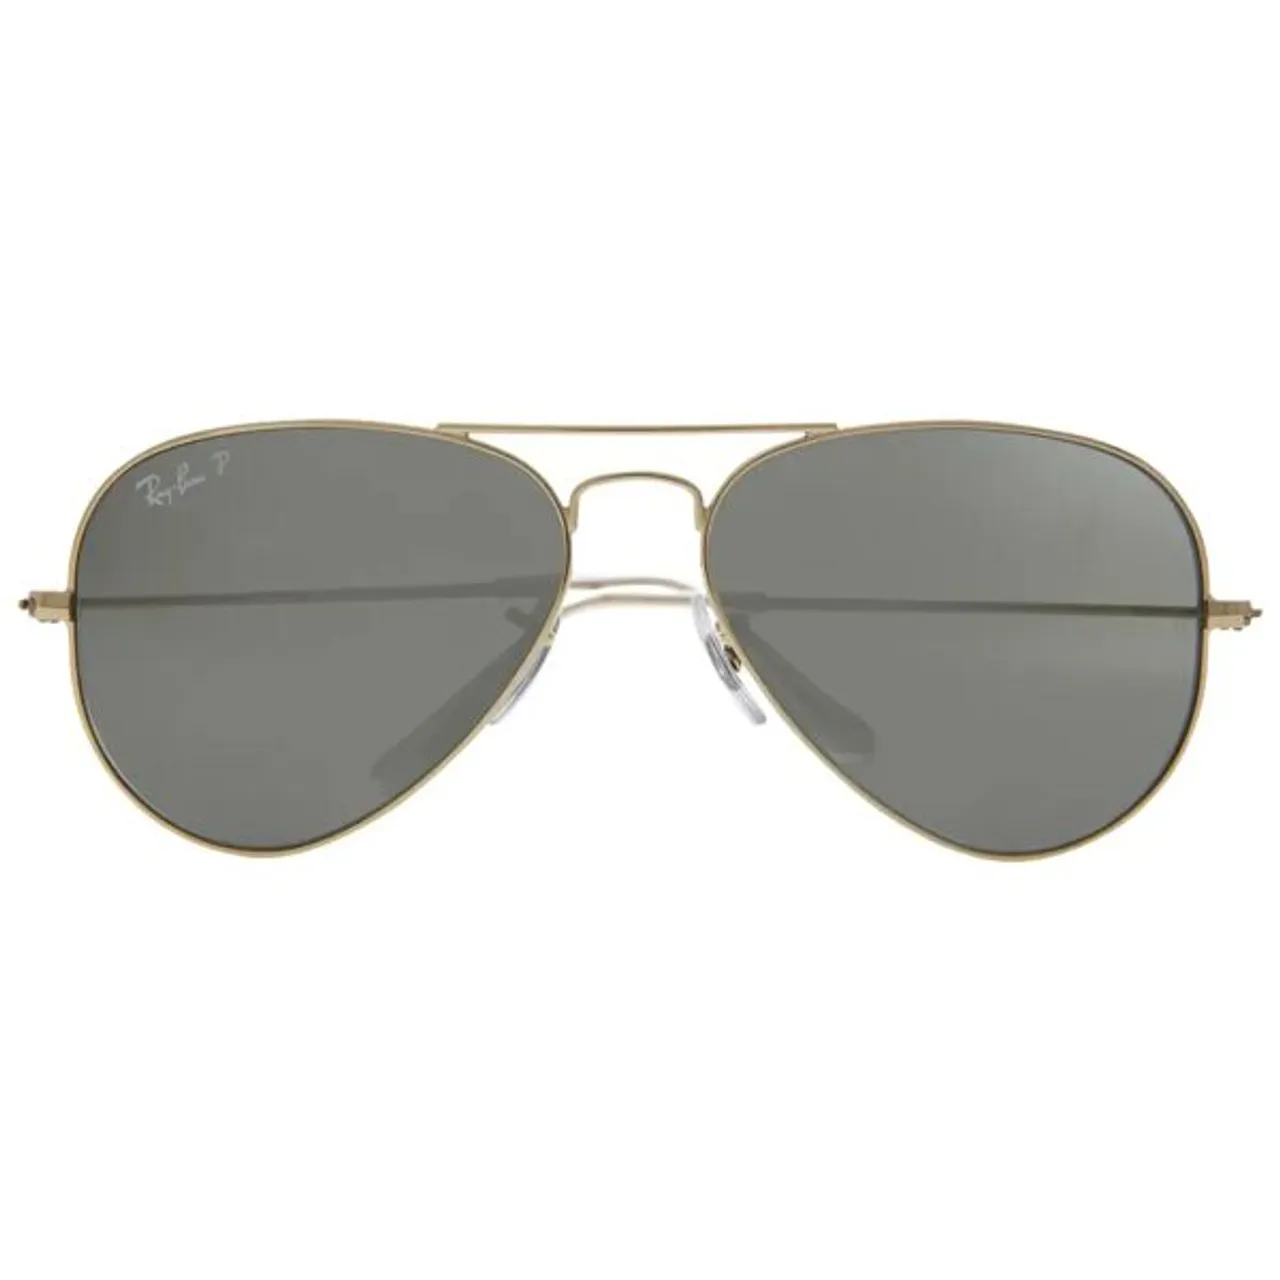 Ray-Ban RB3025 Polarised Aviator Sunglasses - Gold/Grey - Male